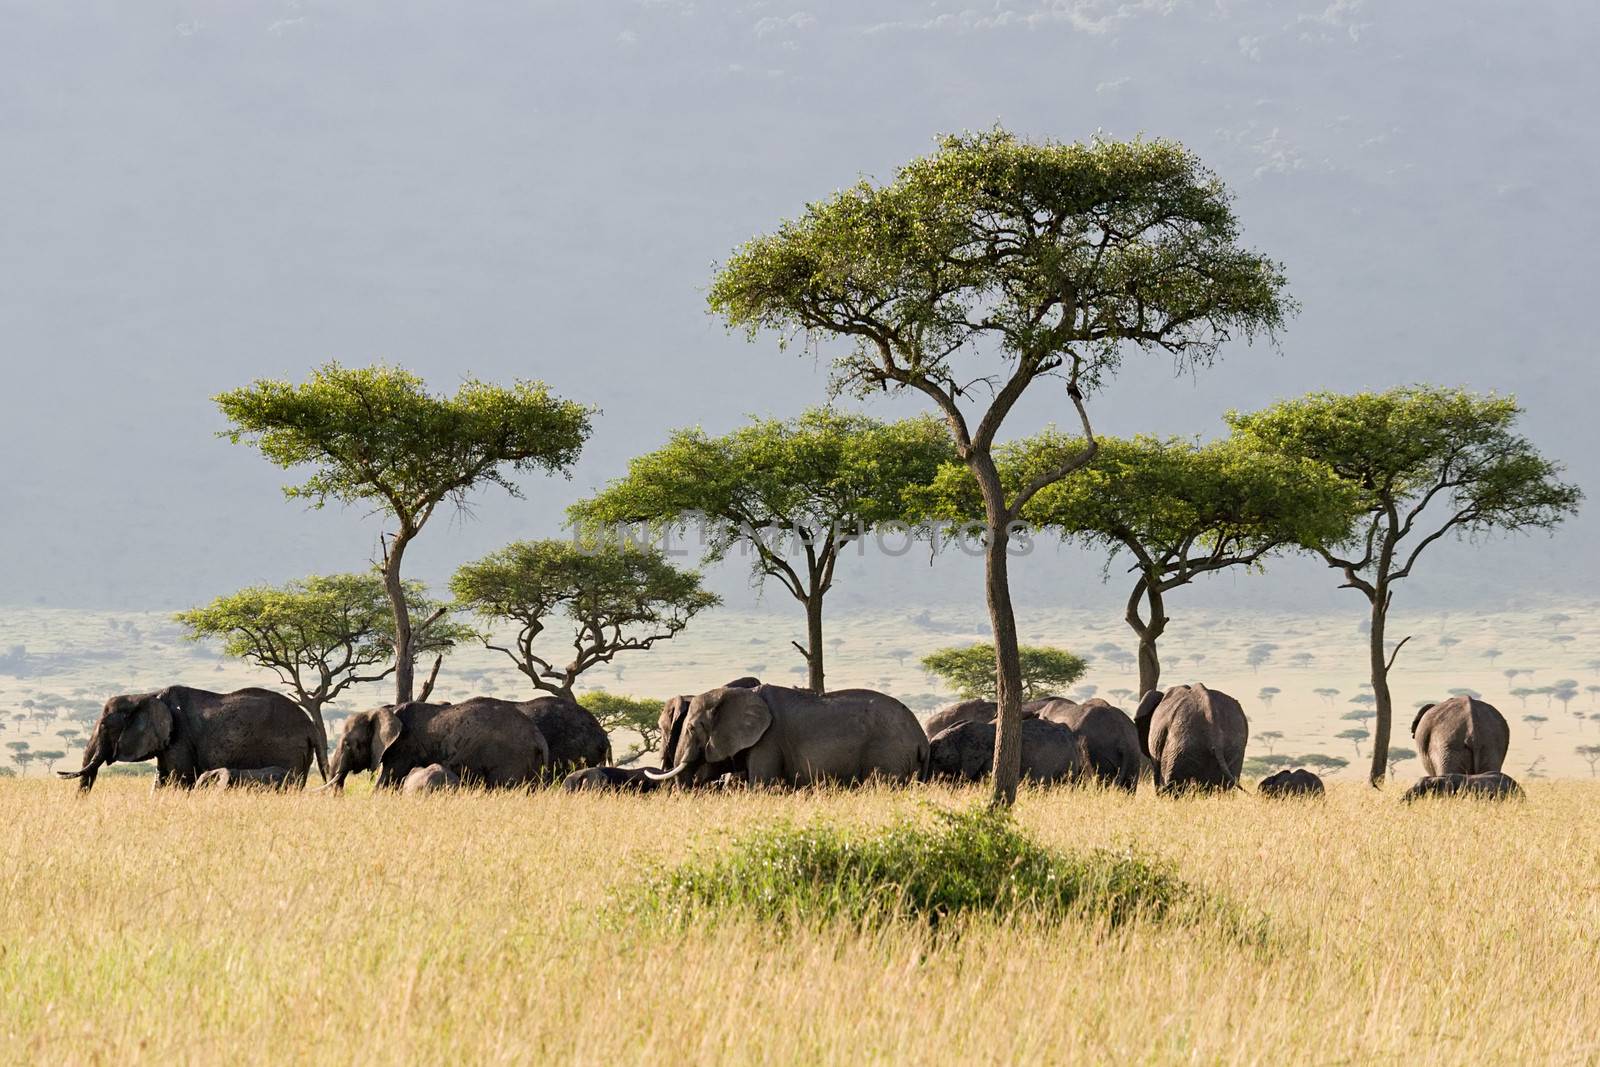 Elephant herd walking through the Savannah in Massai Mara, Kenya.